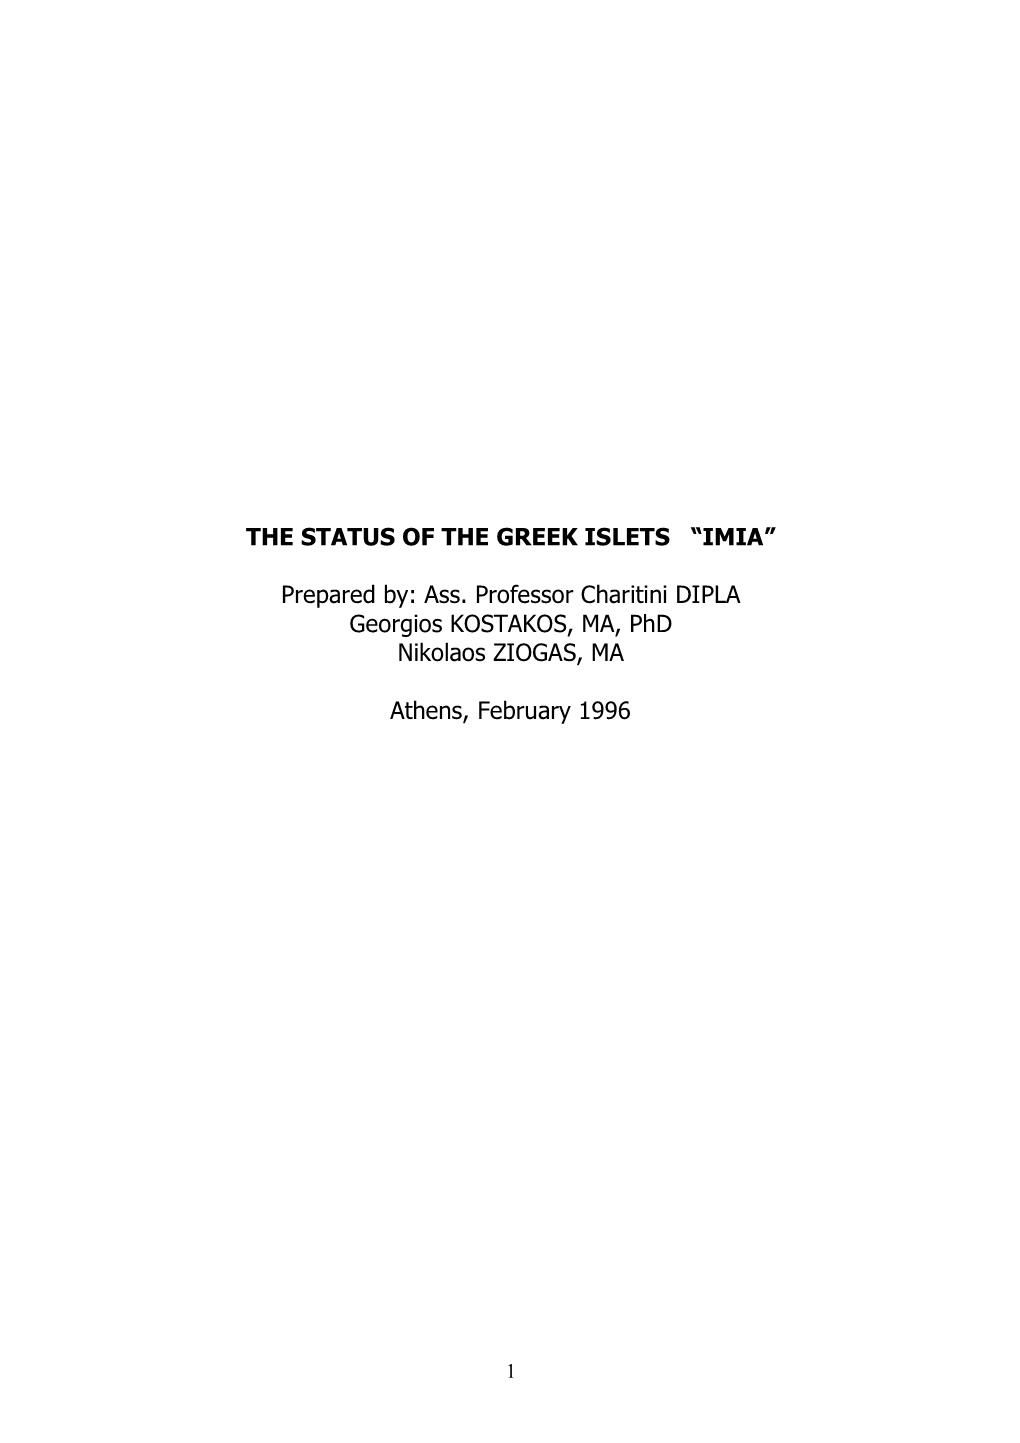 THE STATUS of the GREEK ISLETS “IMIA” Prepared By: Ass. Professor Charitini DIPLA Georgios KOSTAKOS, MA, Phd Nikolaos ZIOG